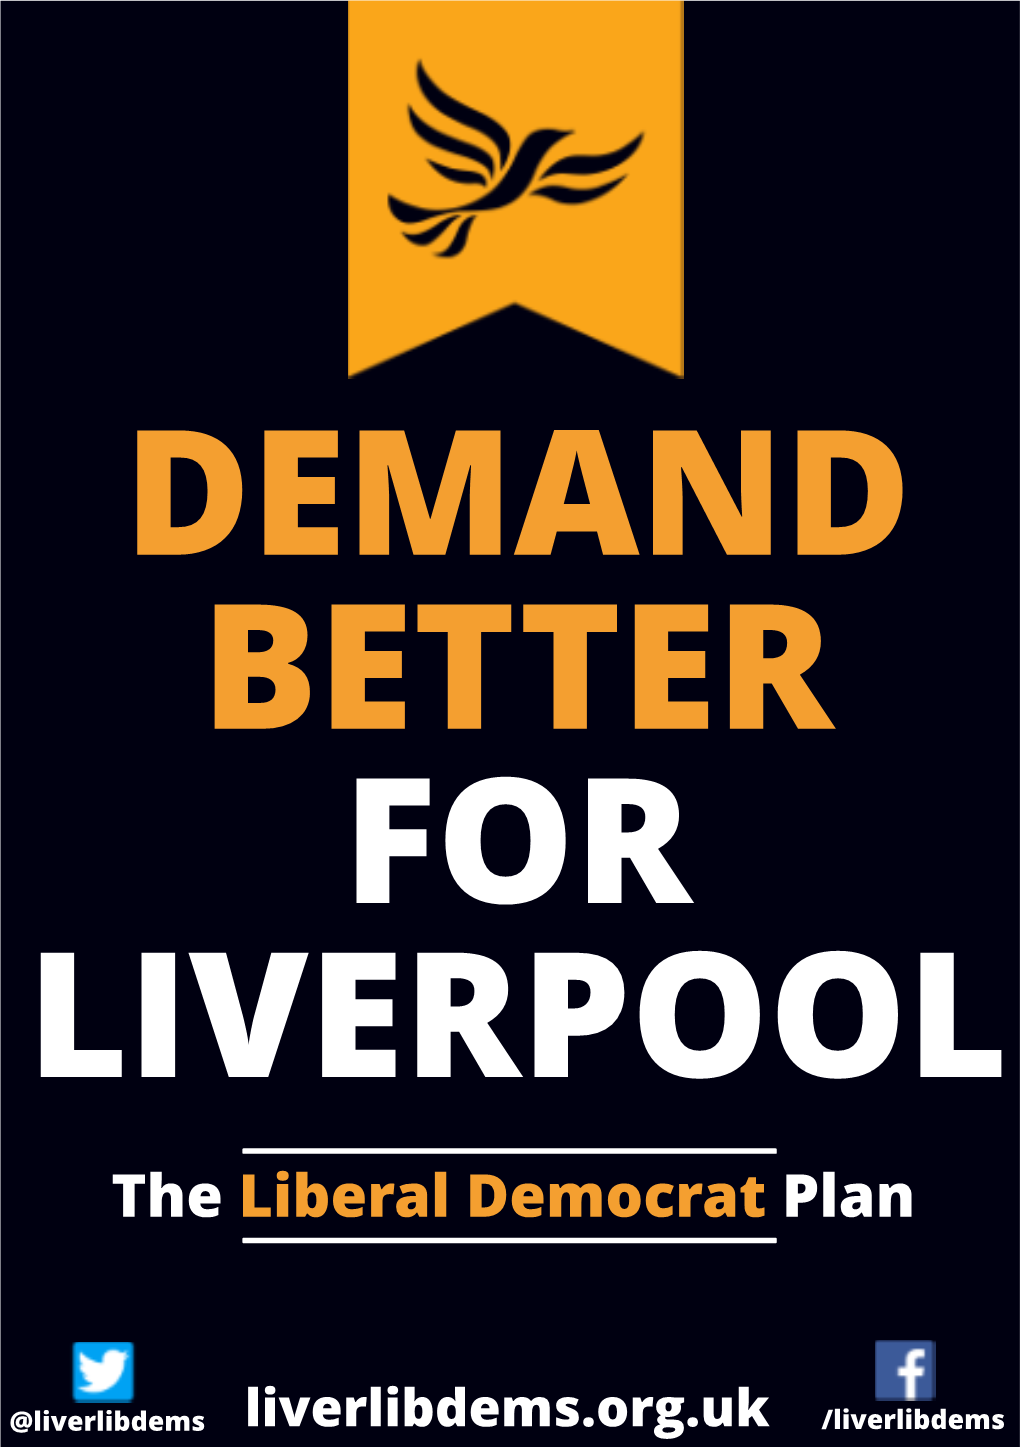 The Liberal Democrat Plan